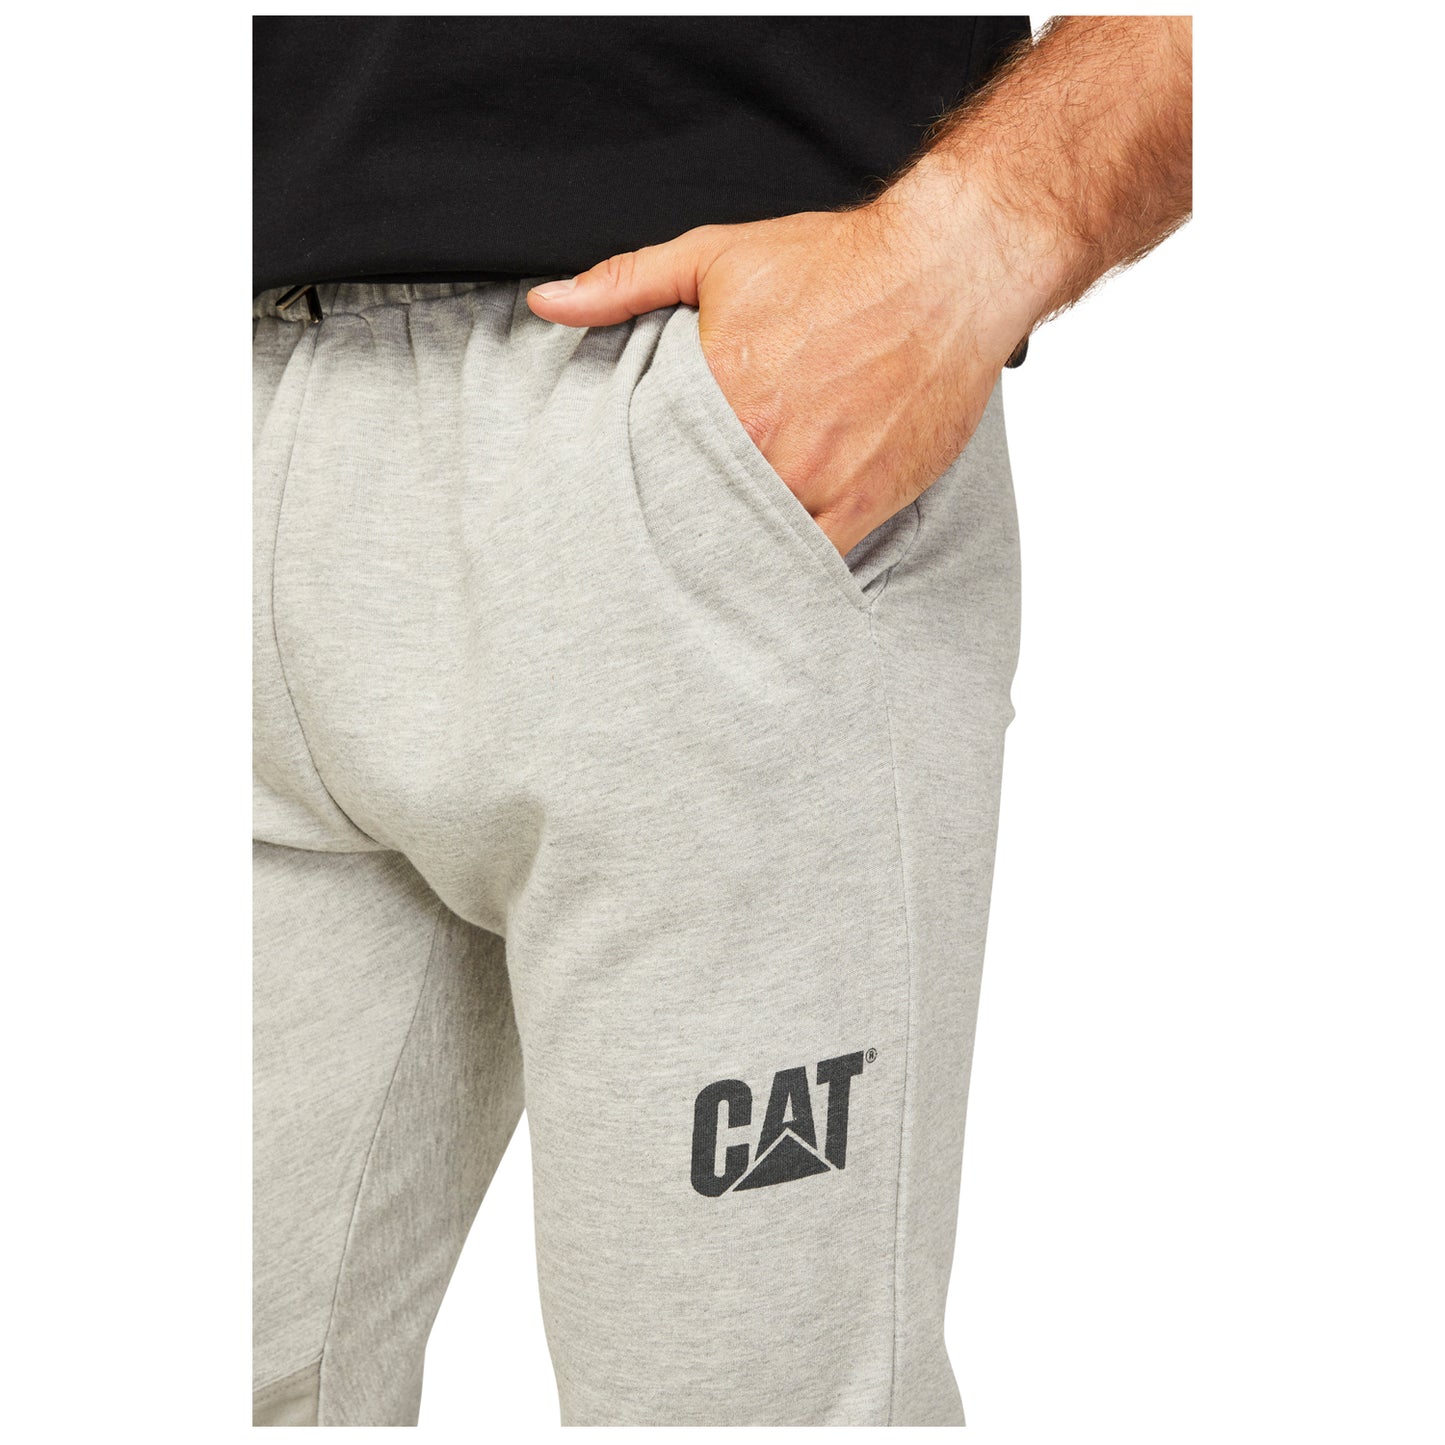 CAT - Track Pant (Heather Grey)